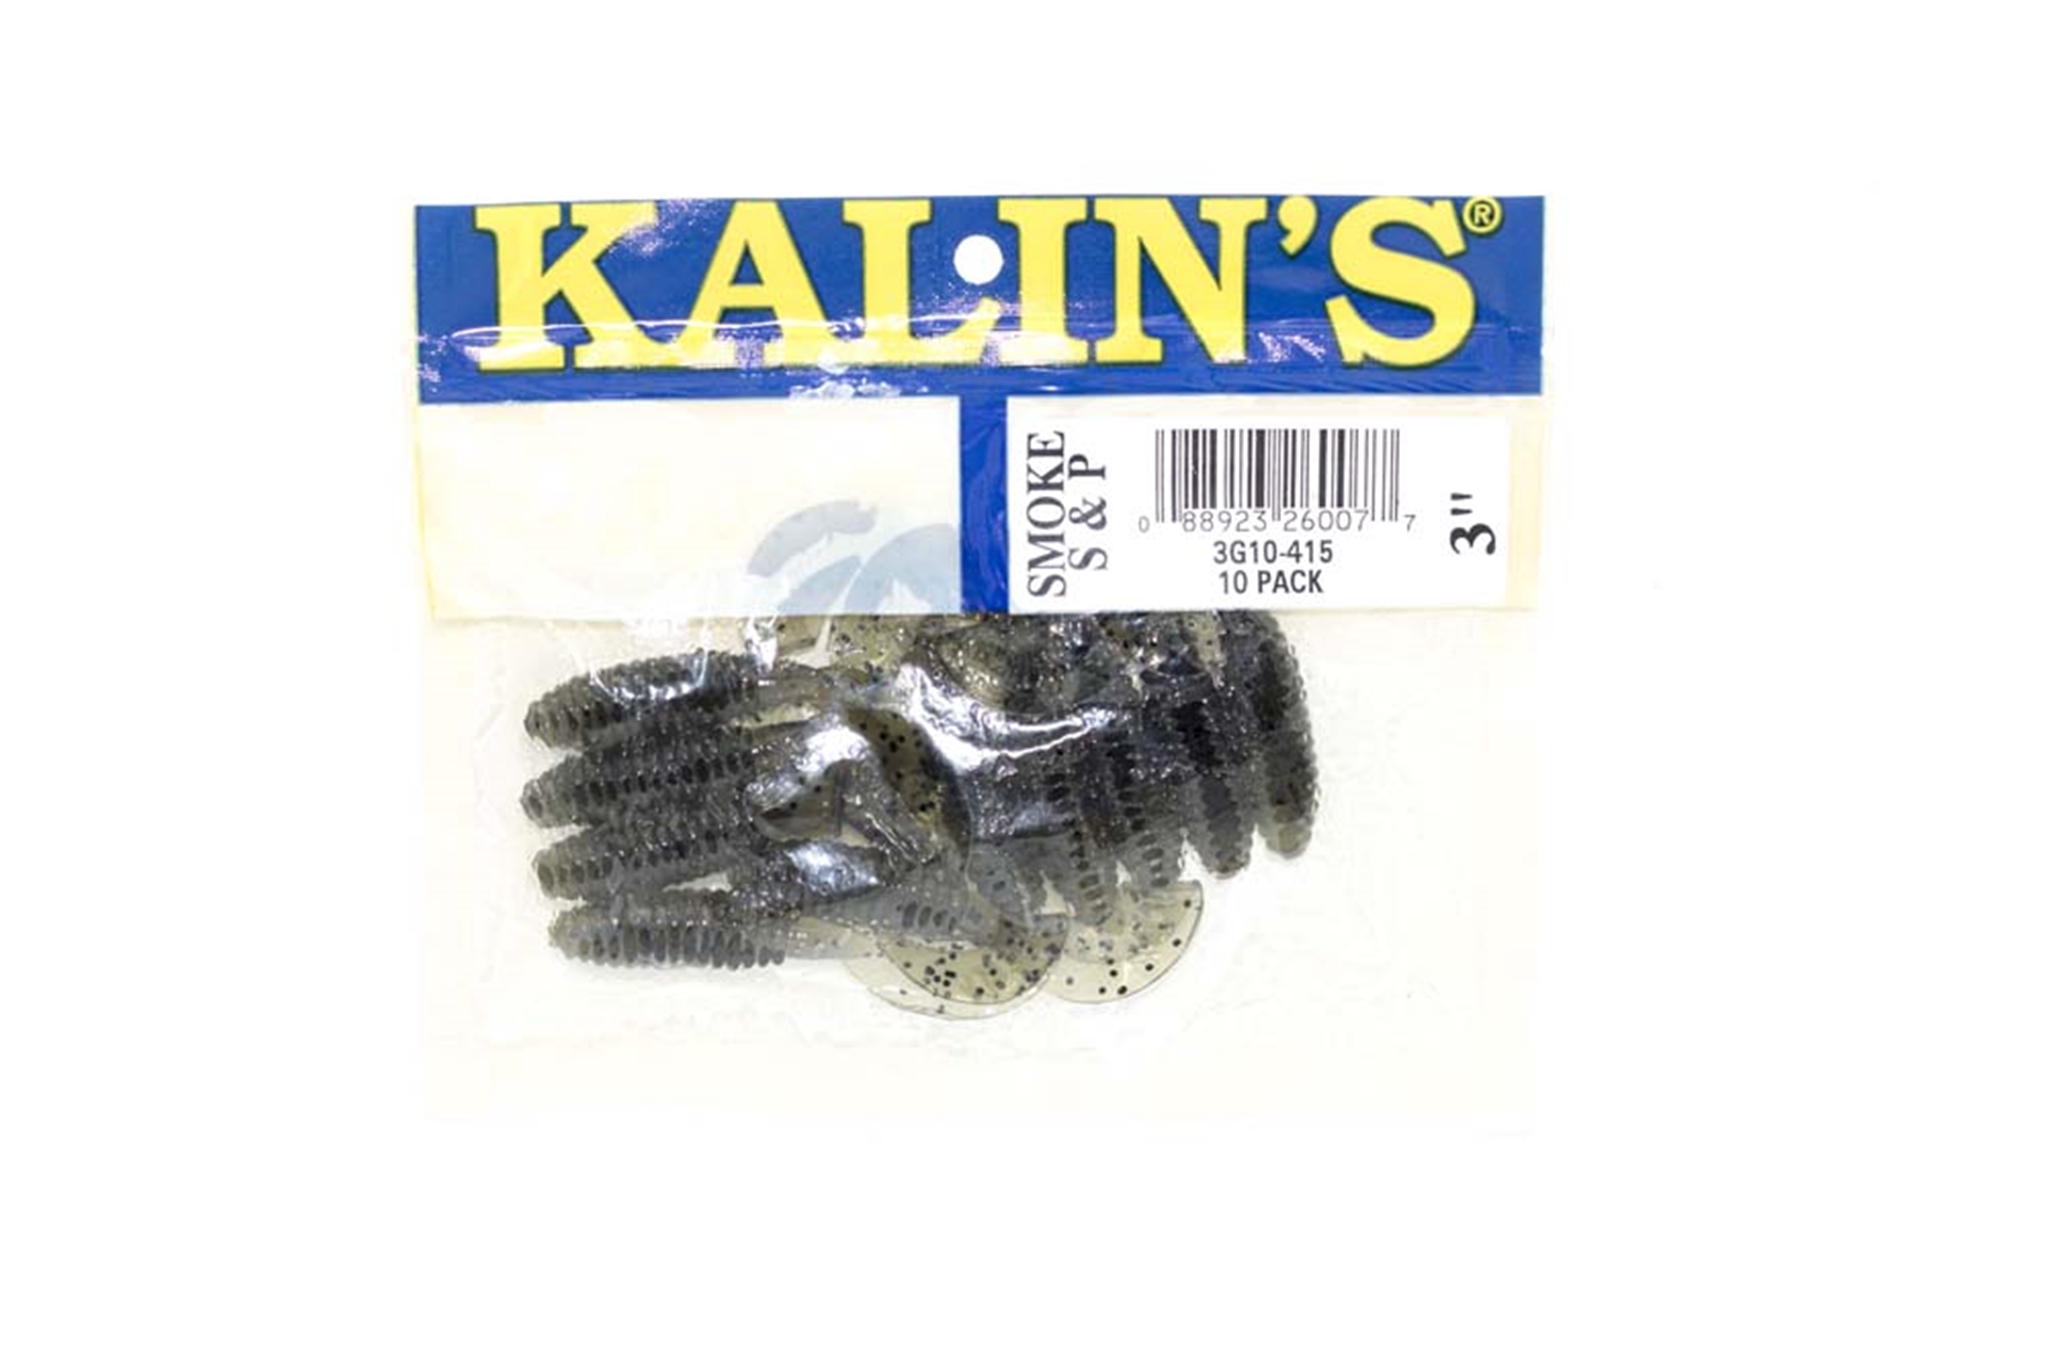 Kalins 5G10-441 Lunker Grub 3 Smoke Red Salt & Pepper 10 Per Pack